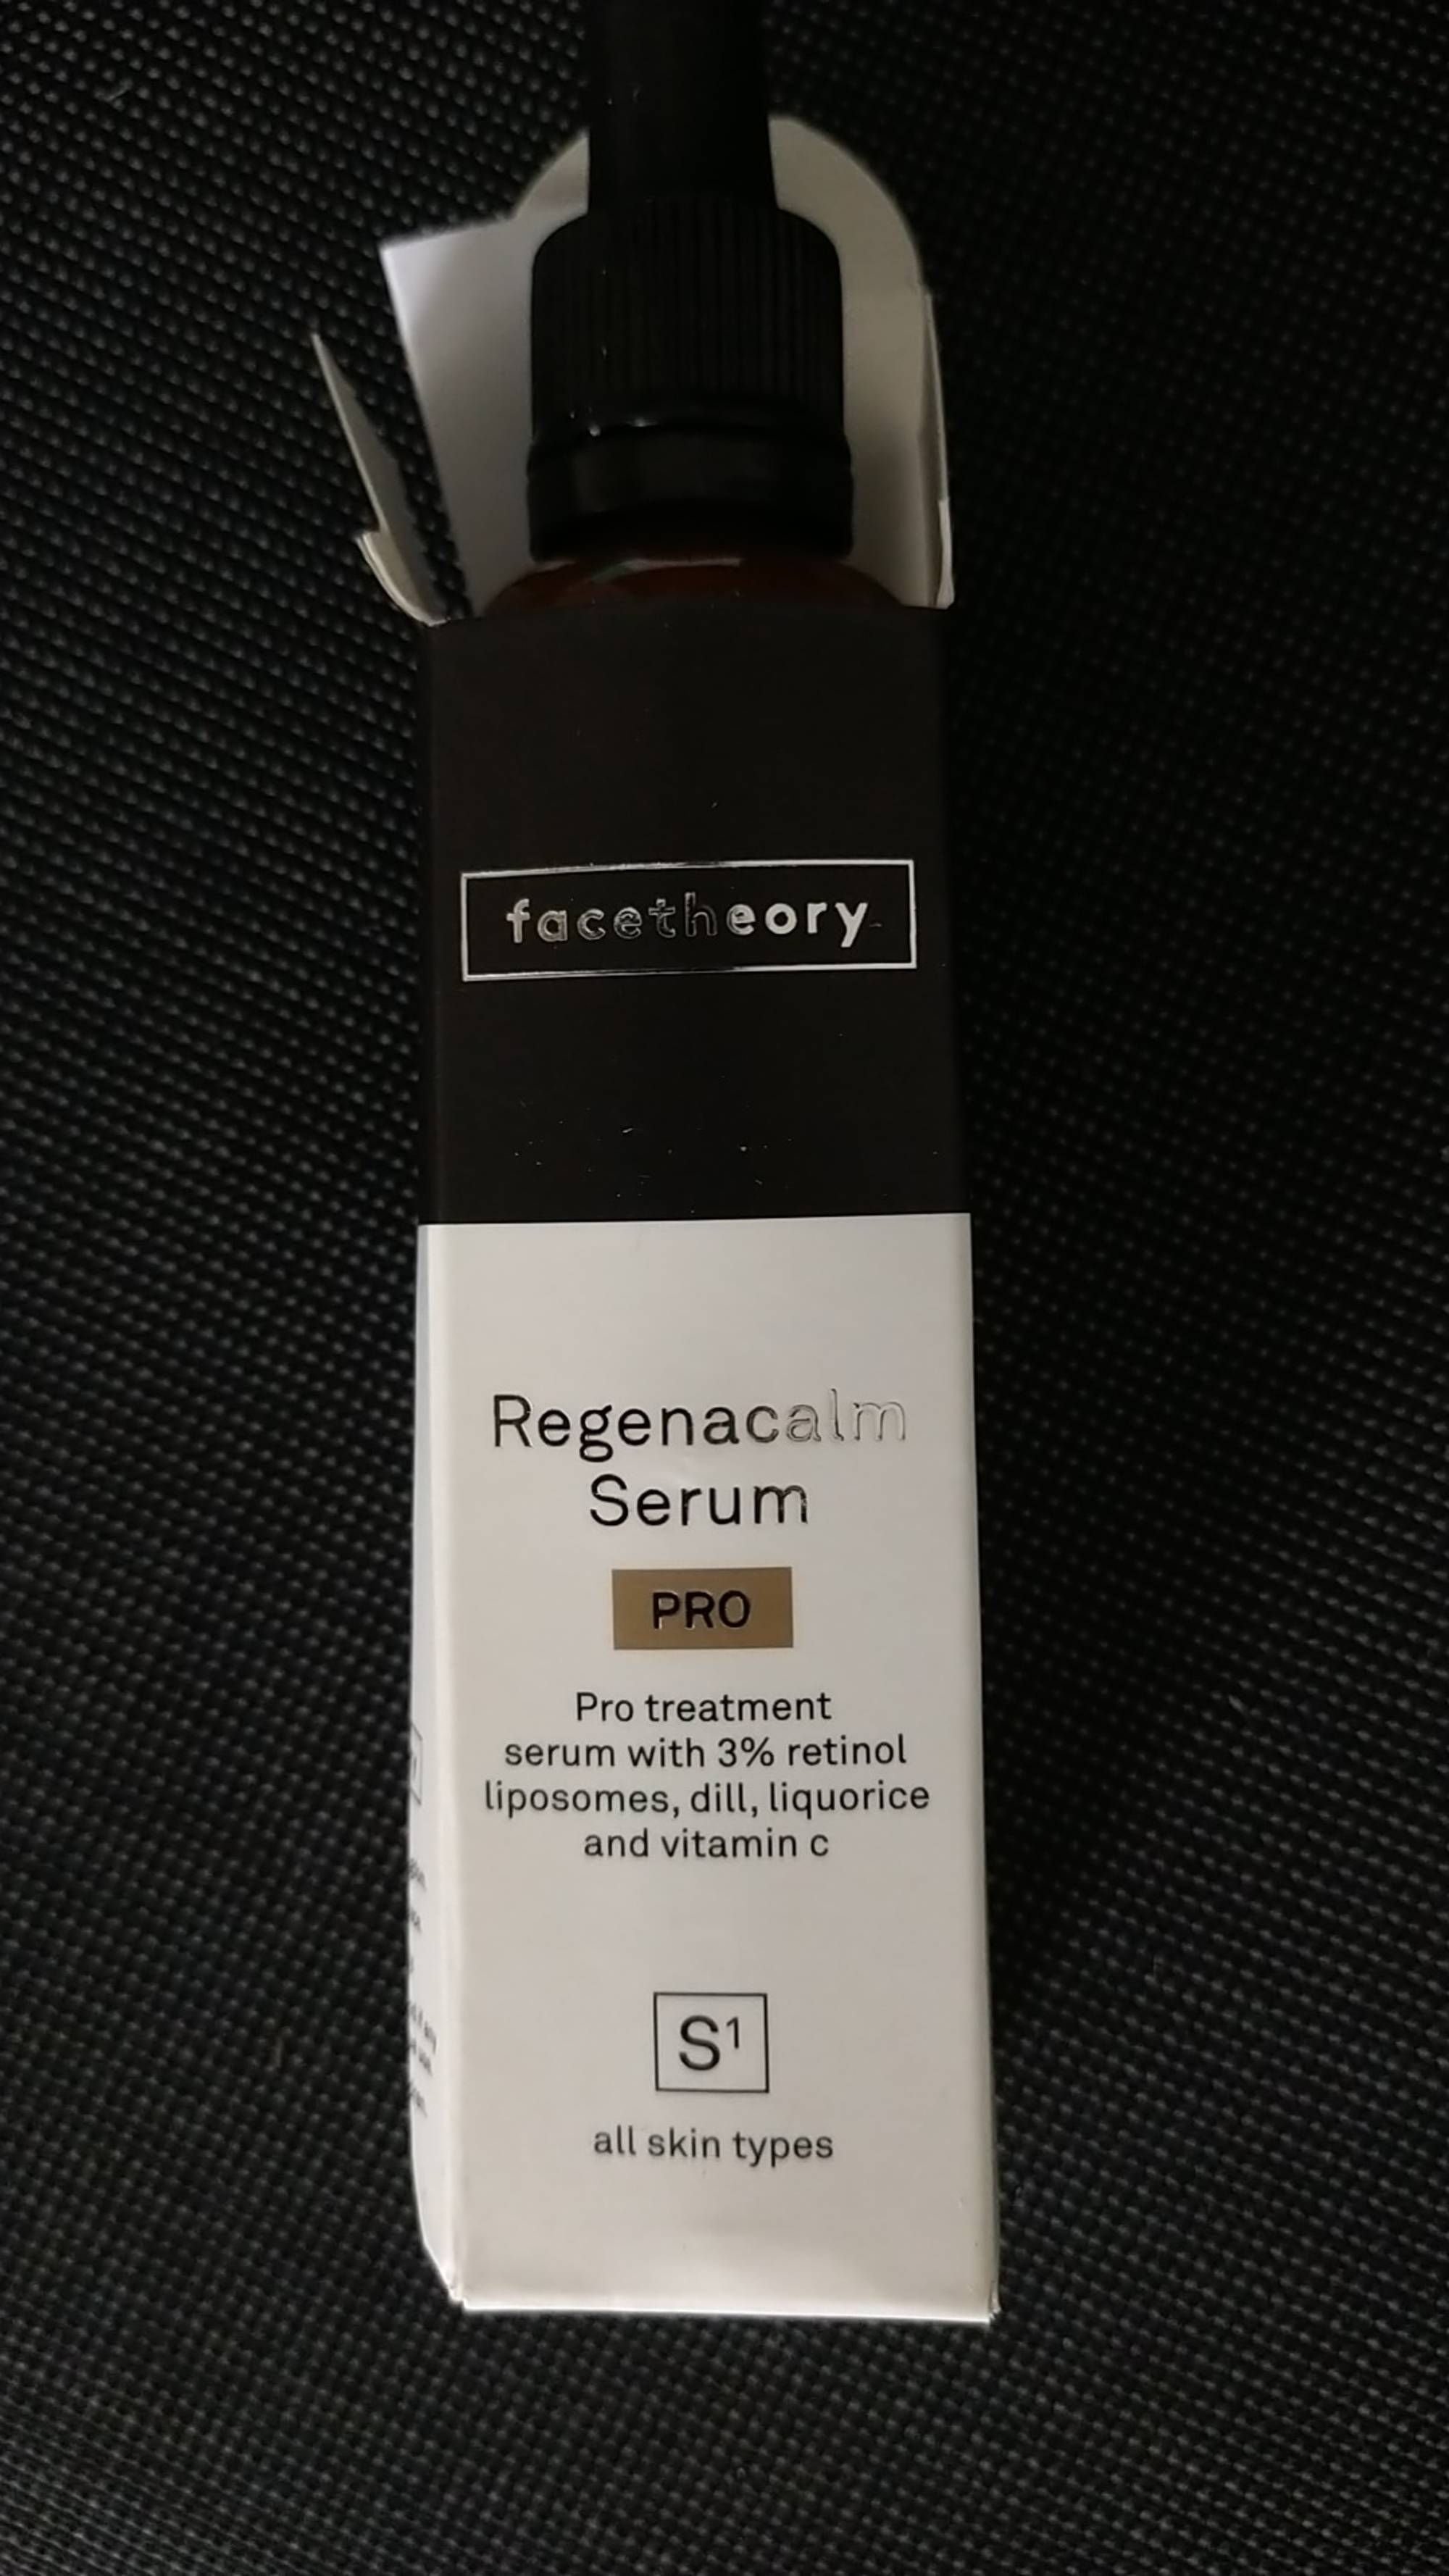 FACETHEORY - Regenacalm serum S1 pro 